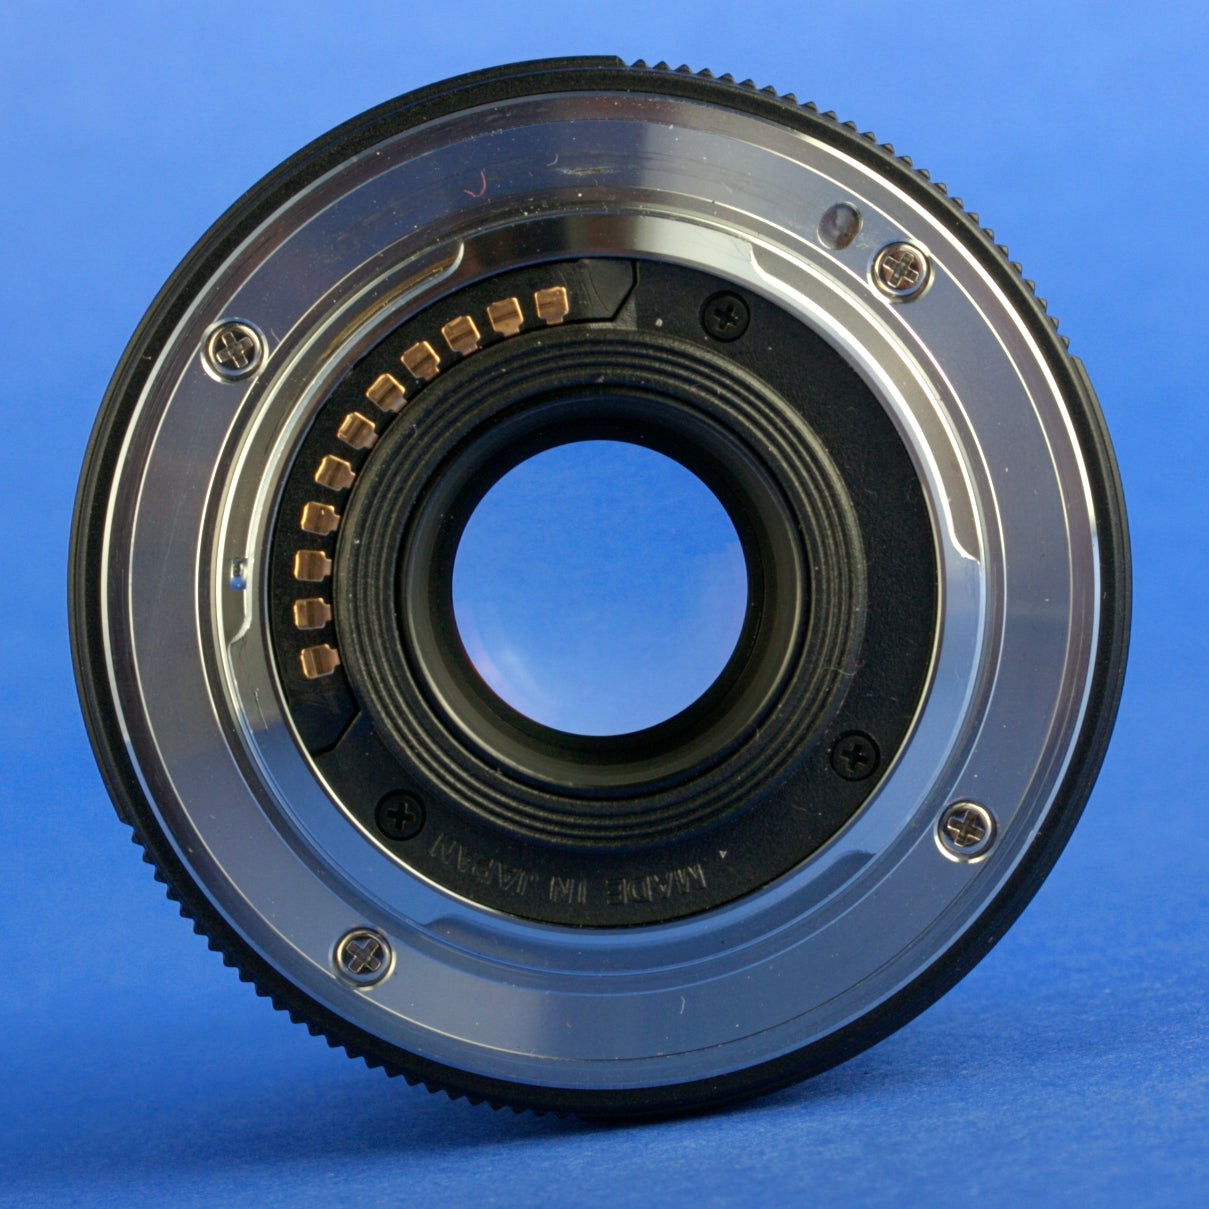 Olympus 25mm 1.8 M.Zuiko Digital Lens Mint Condition